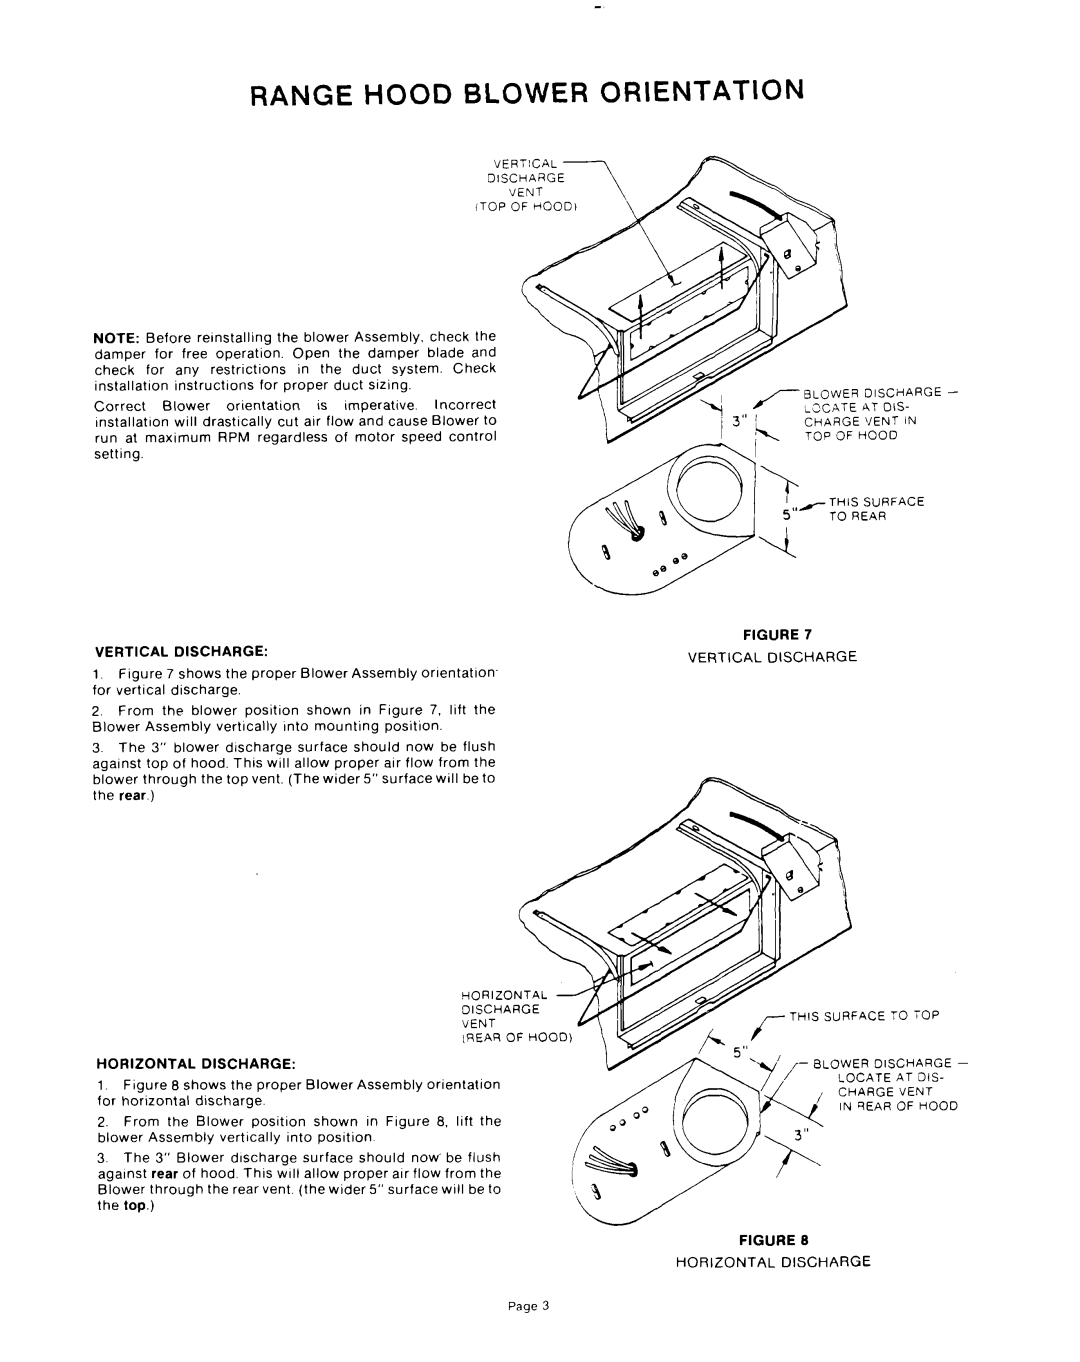 Whirlpool RH8930XLS manual Range Hood Blower Orientation, Vertical Discharge, Horizontal Discharge 